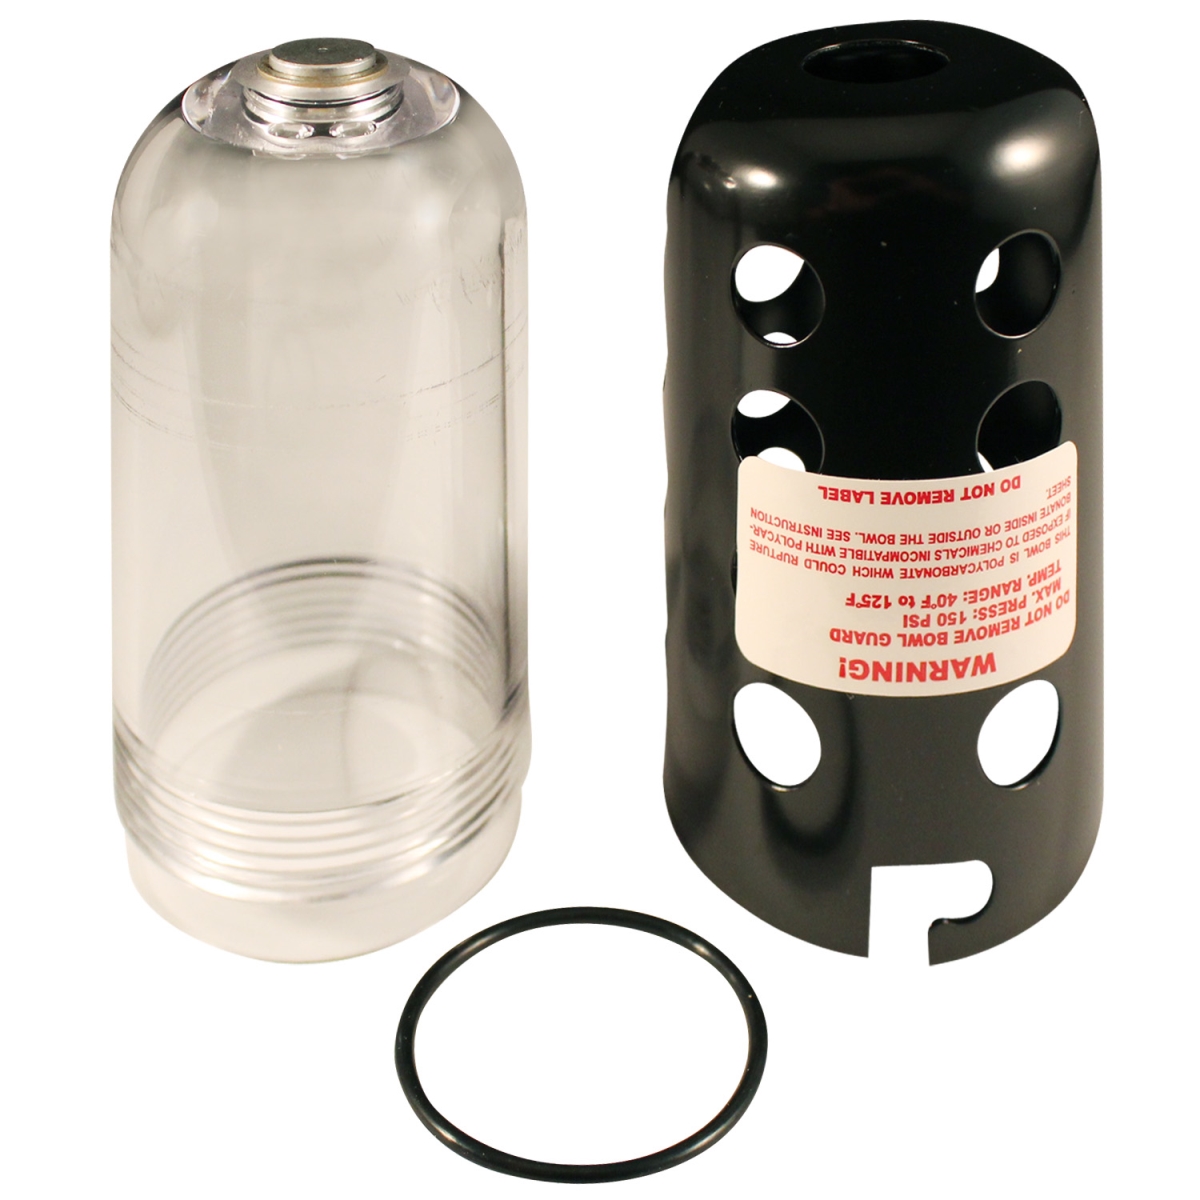 Milton 1028p Plastic Filter & Lubricator Replacement Bowl